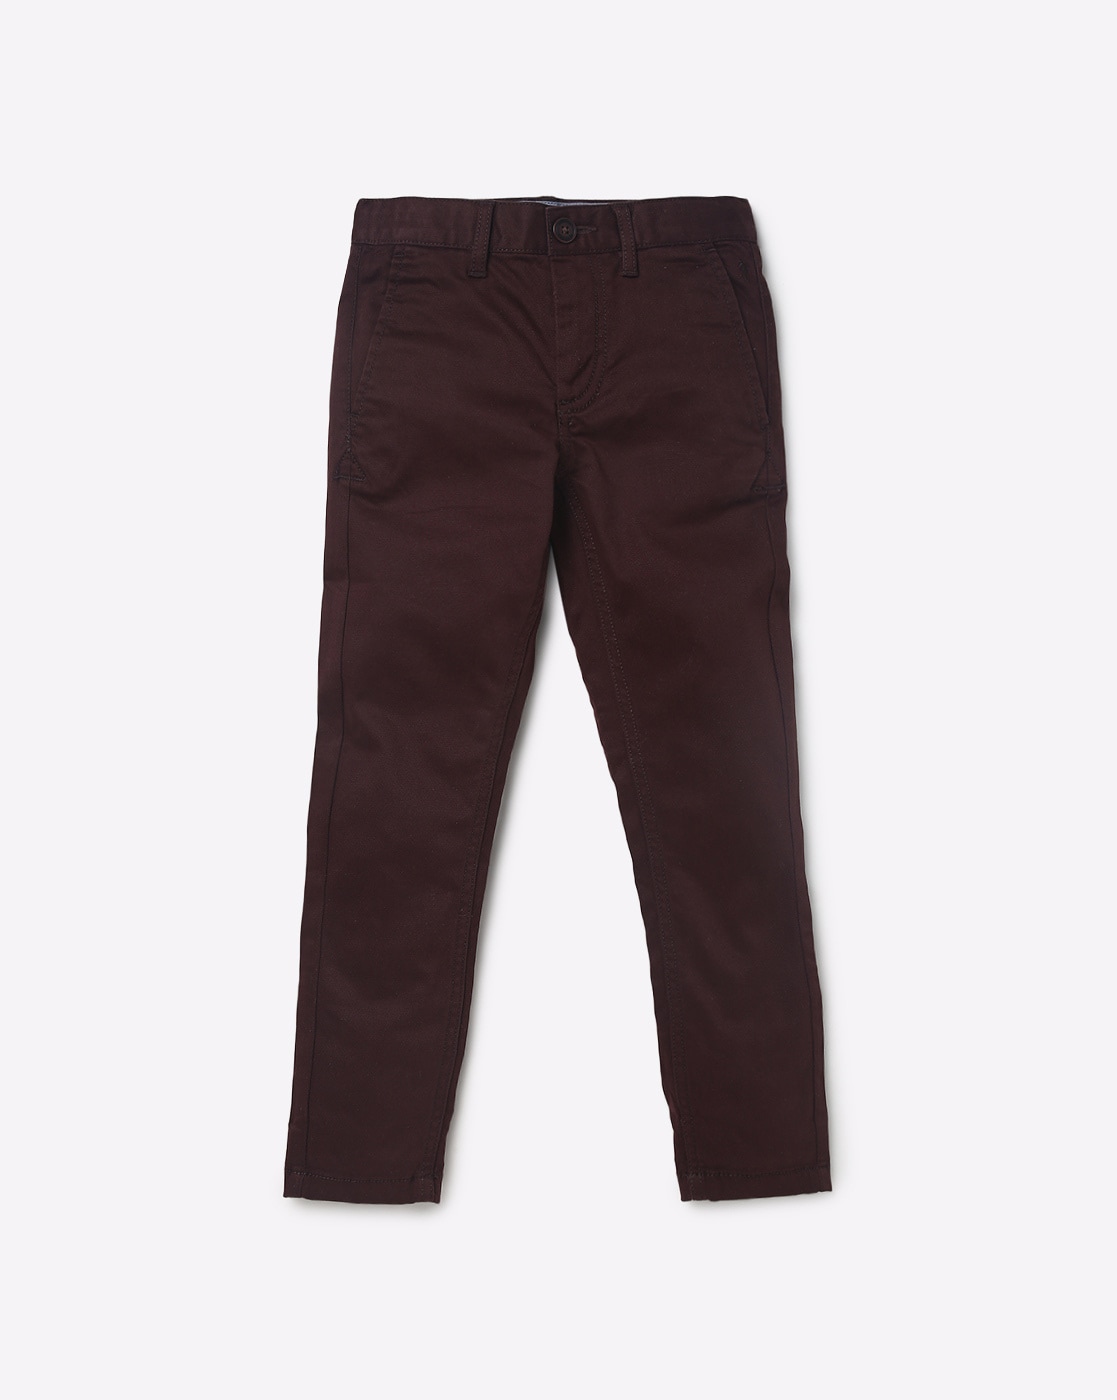 Shop Online Boys Brown Solid Pants at ₹885